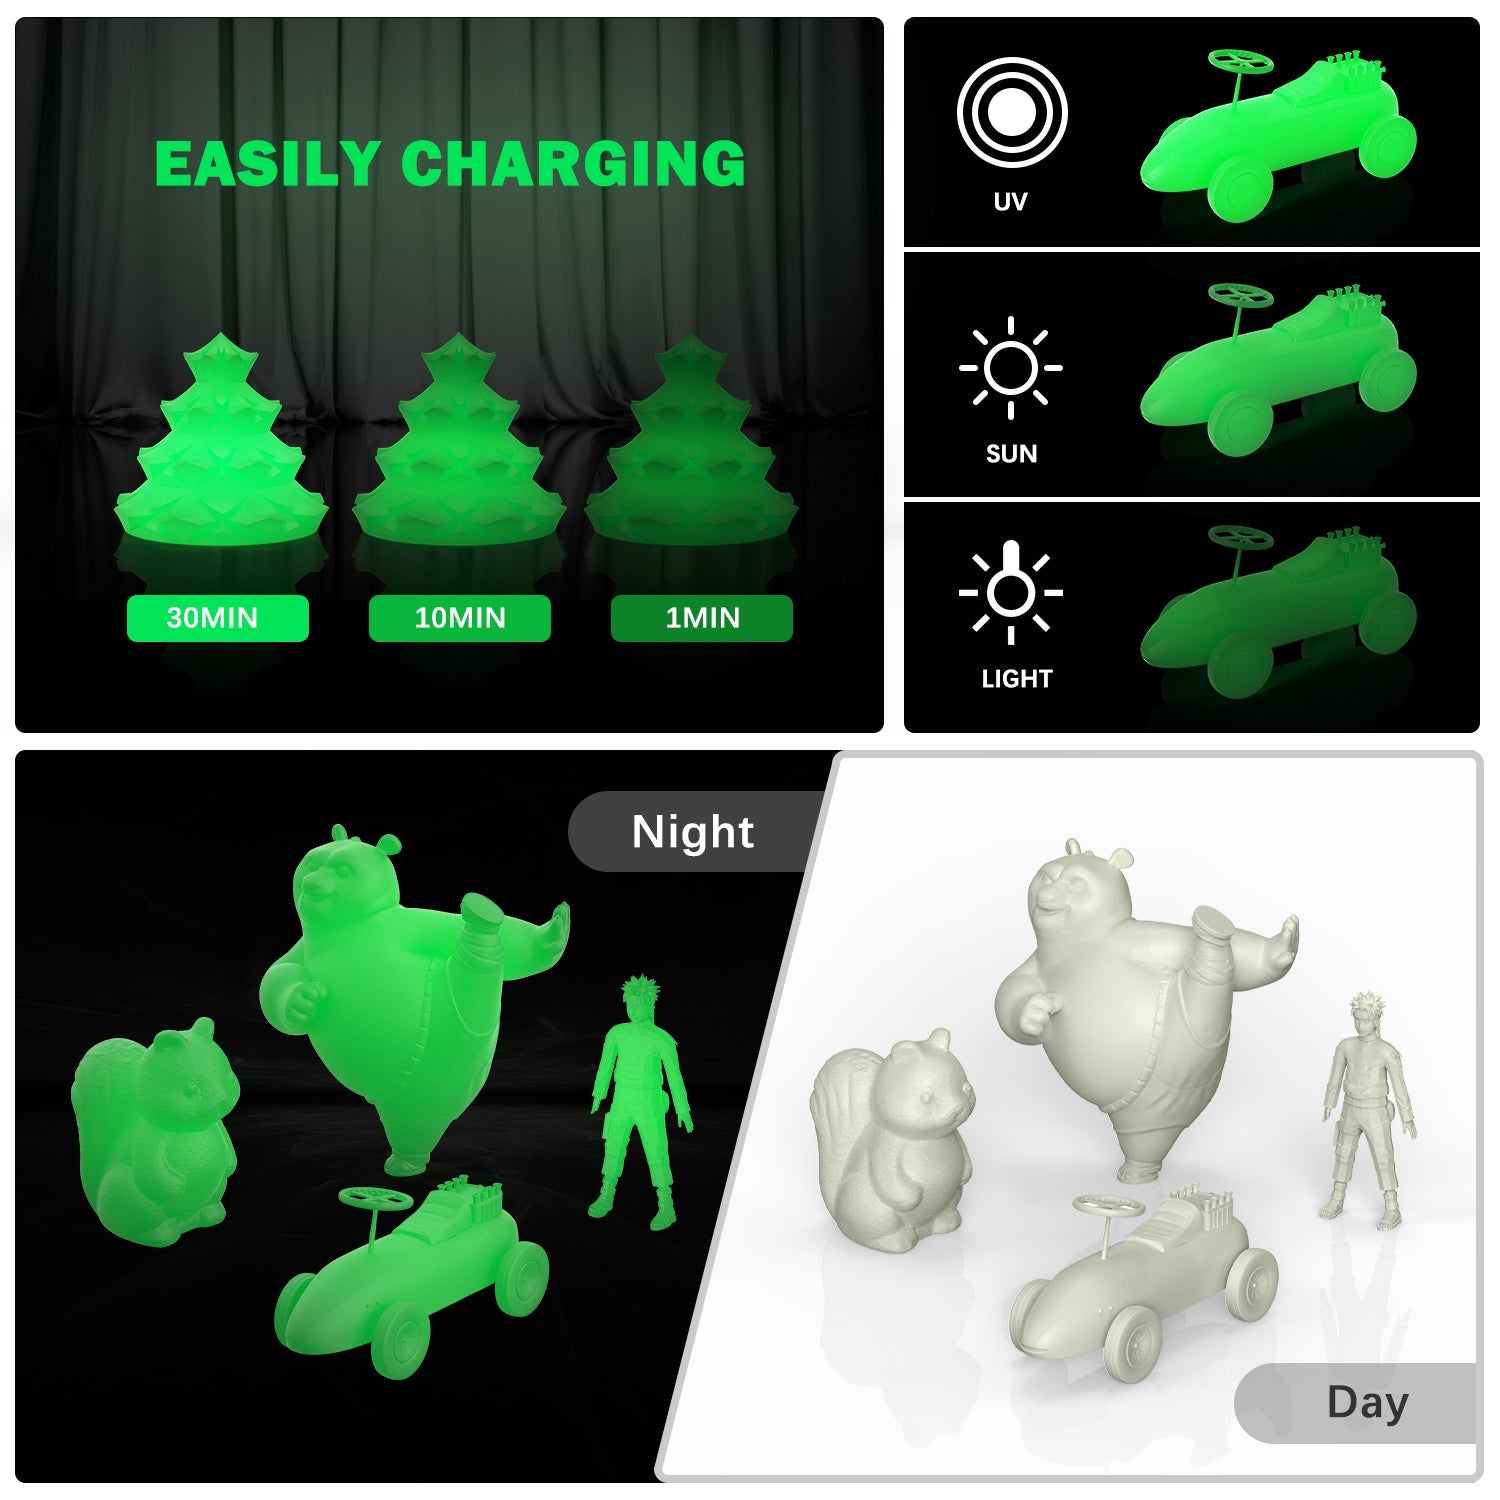 Pre-sale ERYONE Glow Green in The Dark PLA 3D Printer Filament 1.75mm, Dimensional Accuracy +/- 0.05 mm, 1kg (2.2LBS) / Spool